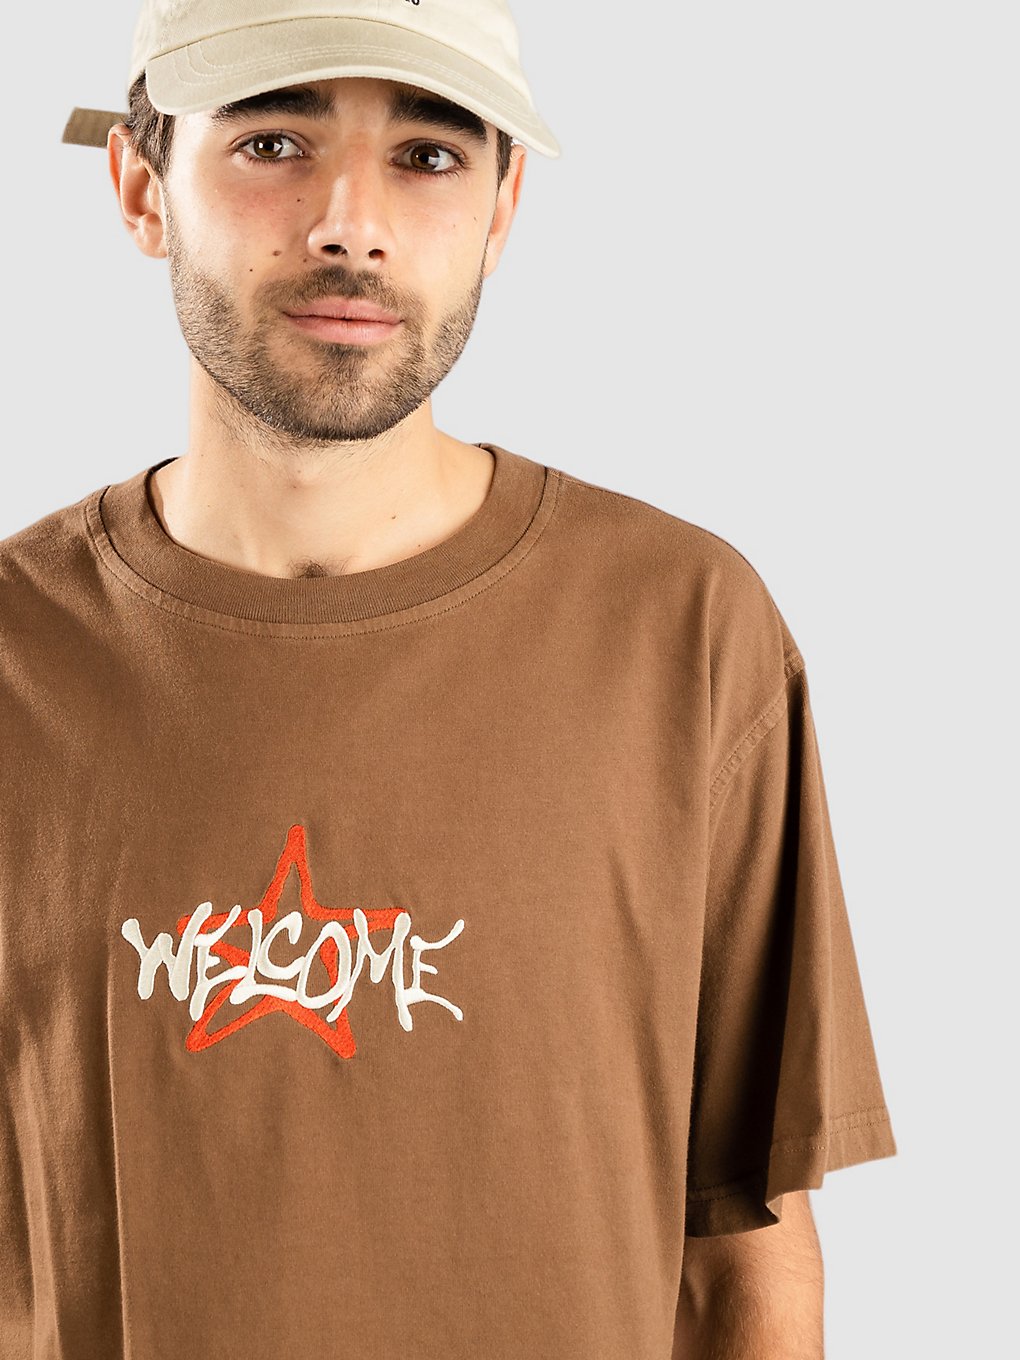 Welcome Vega Garment Dyed vest T-Shirt patroon